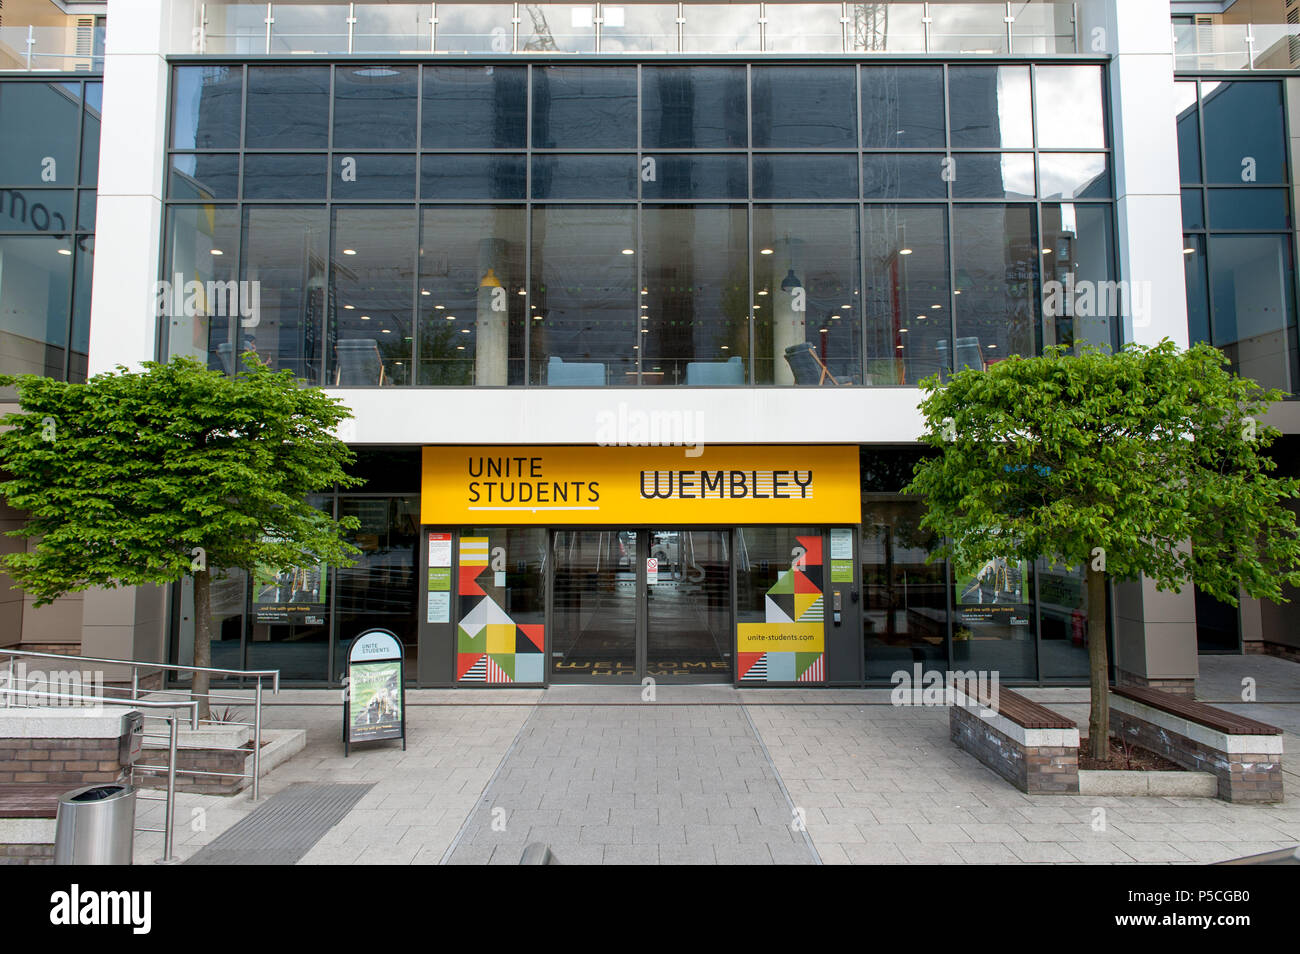 Moderni alloggi studenteschi unite in Wembley Foto Stock